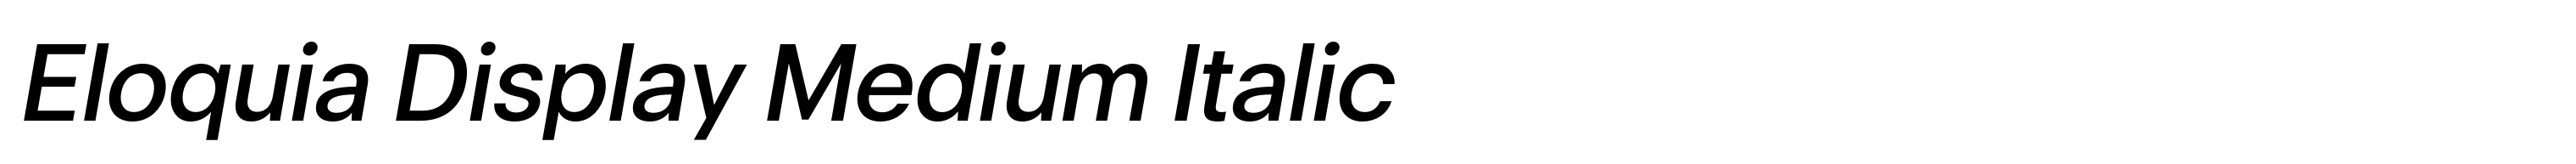 Eloquia Display Medium Italic